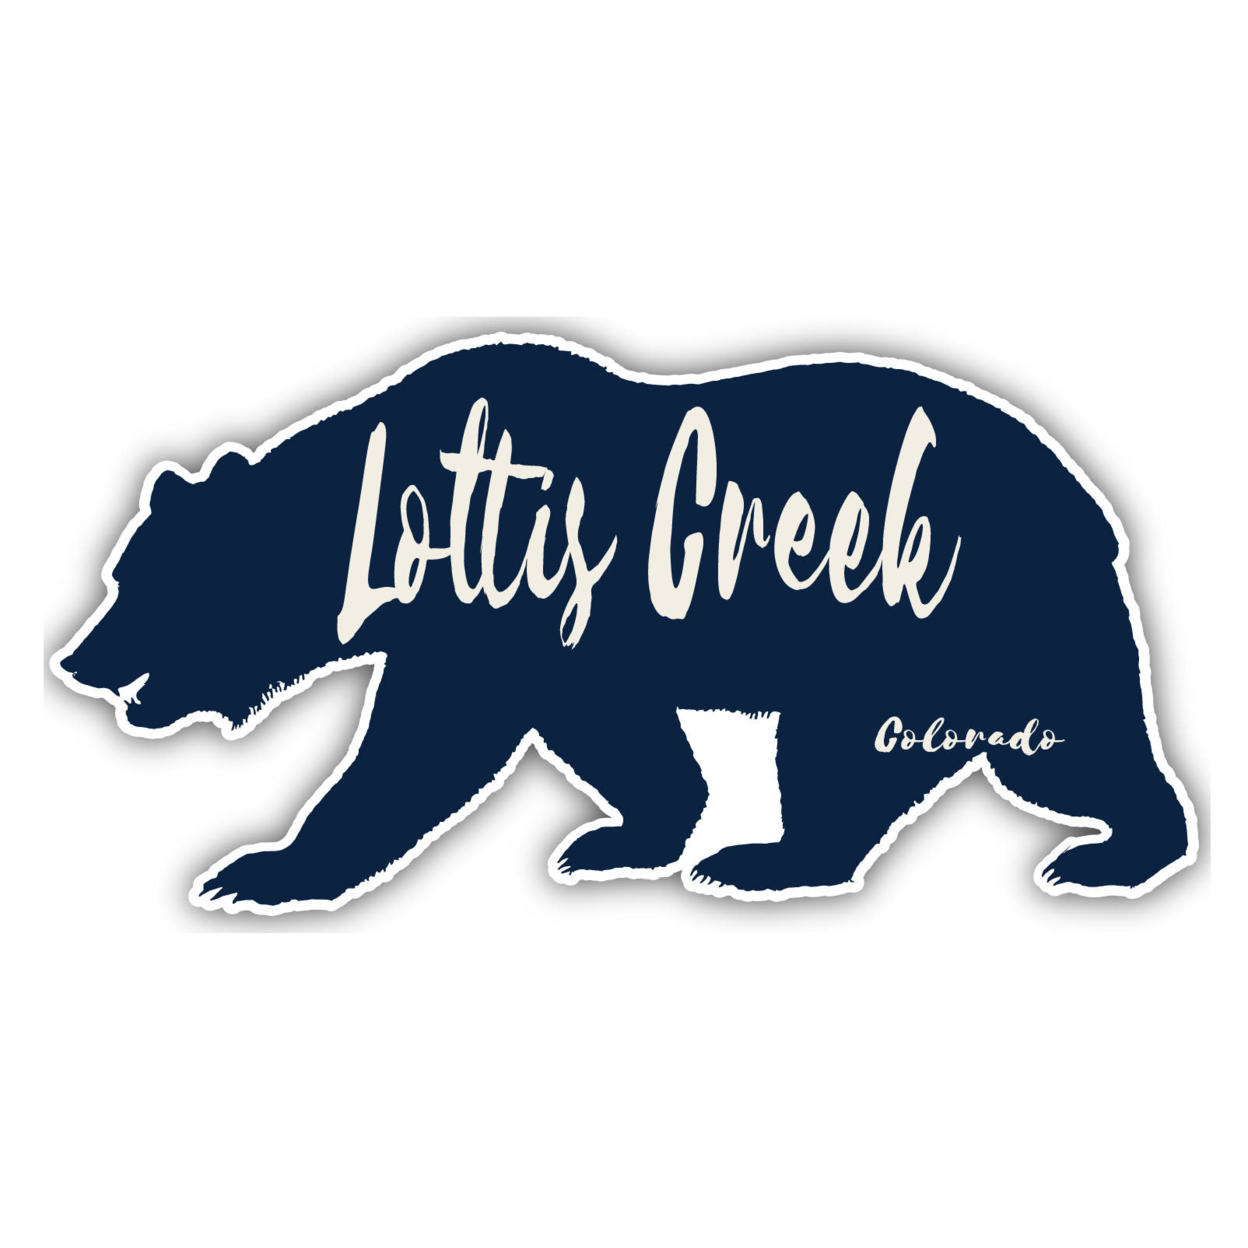 Lottis Creek Colorado Souvenir Decorative Stickers (Choose Theme And Size) - 4-Inch, Bear